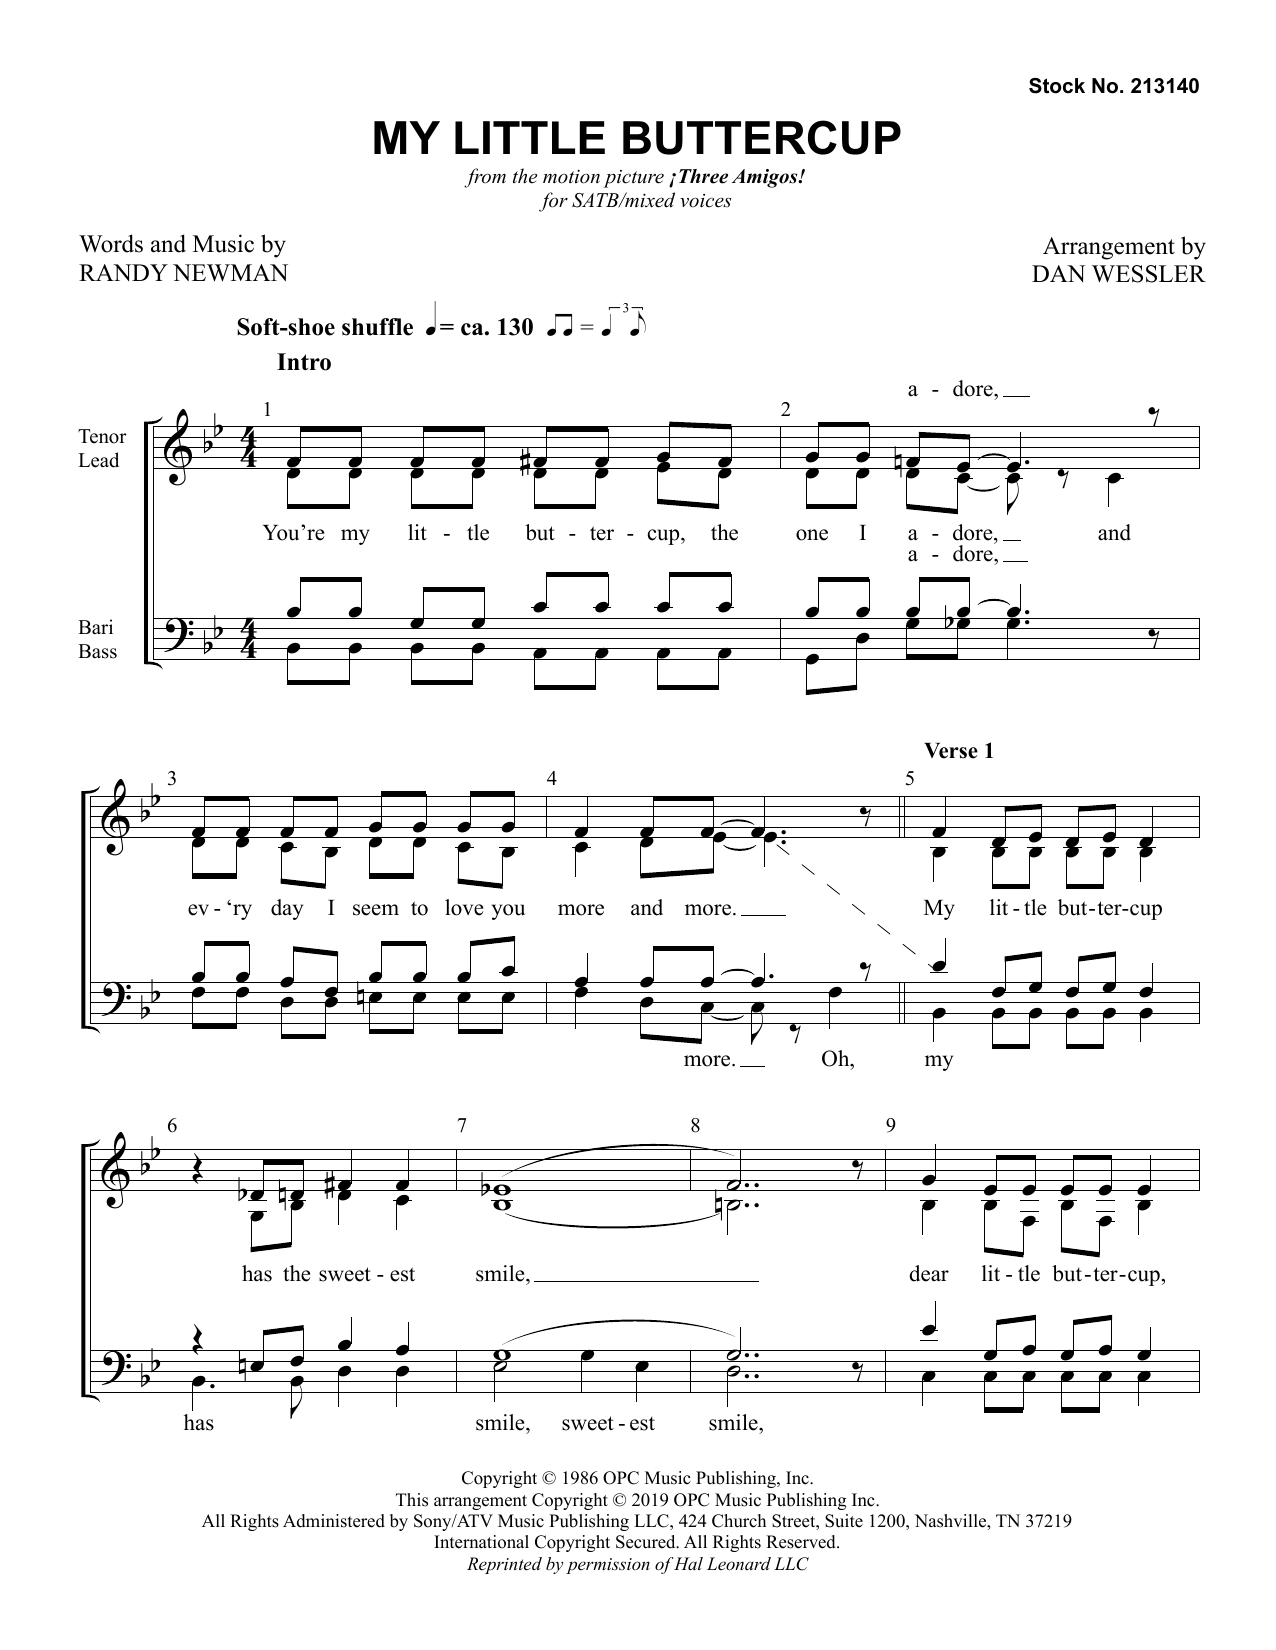 Randy Newman My Little Buttercup (arr. Dan Wessler) Sheet Music Notes & Chords for SSA Choir - Download or Print PDF